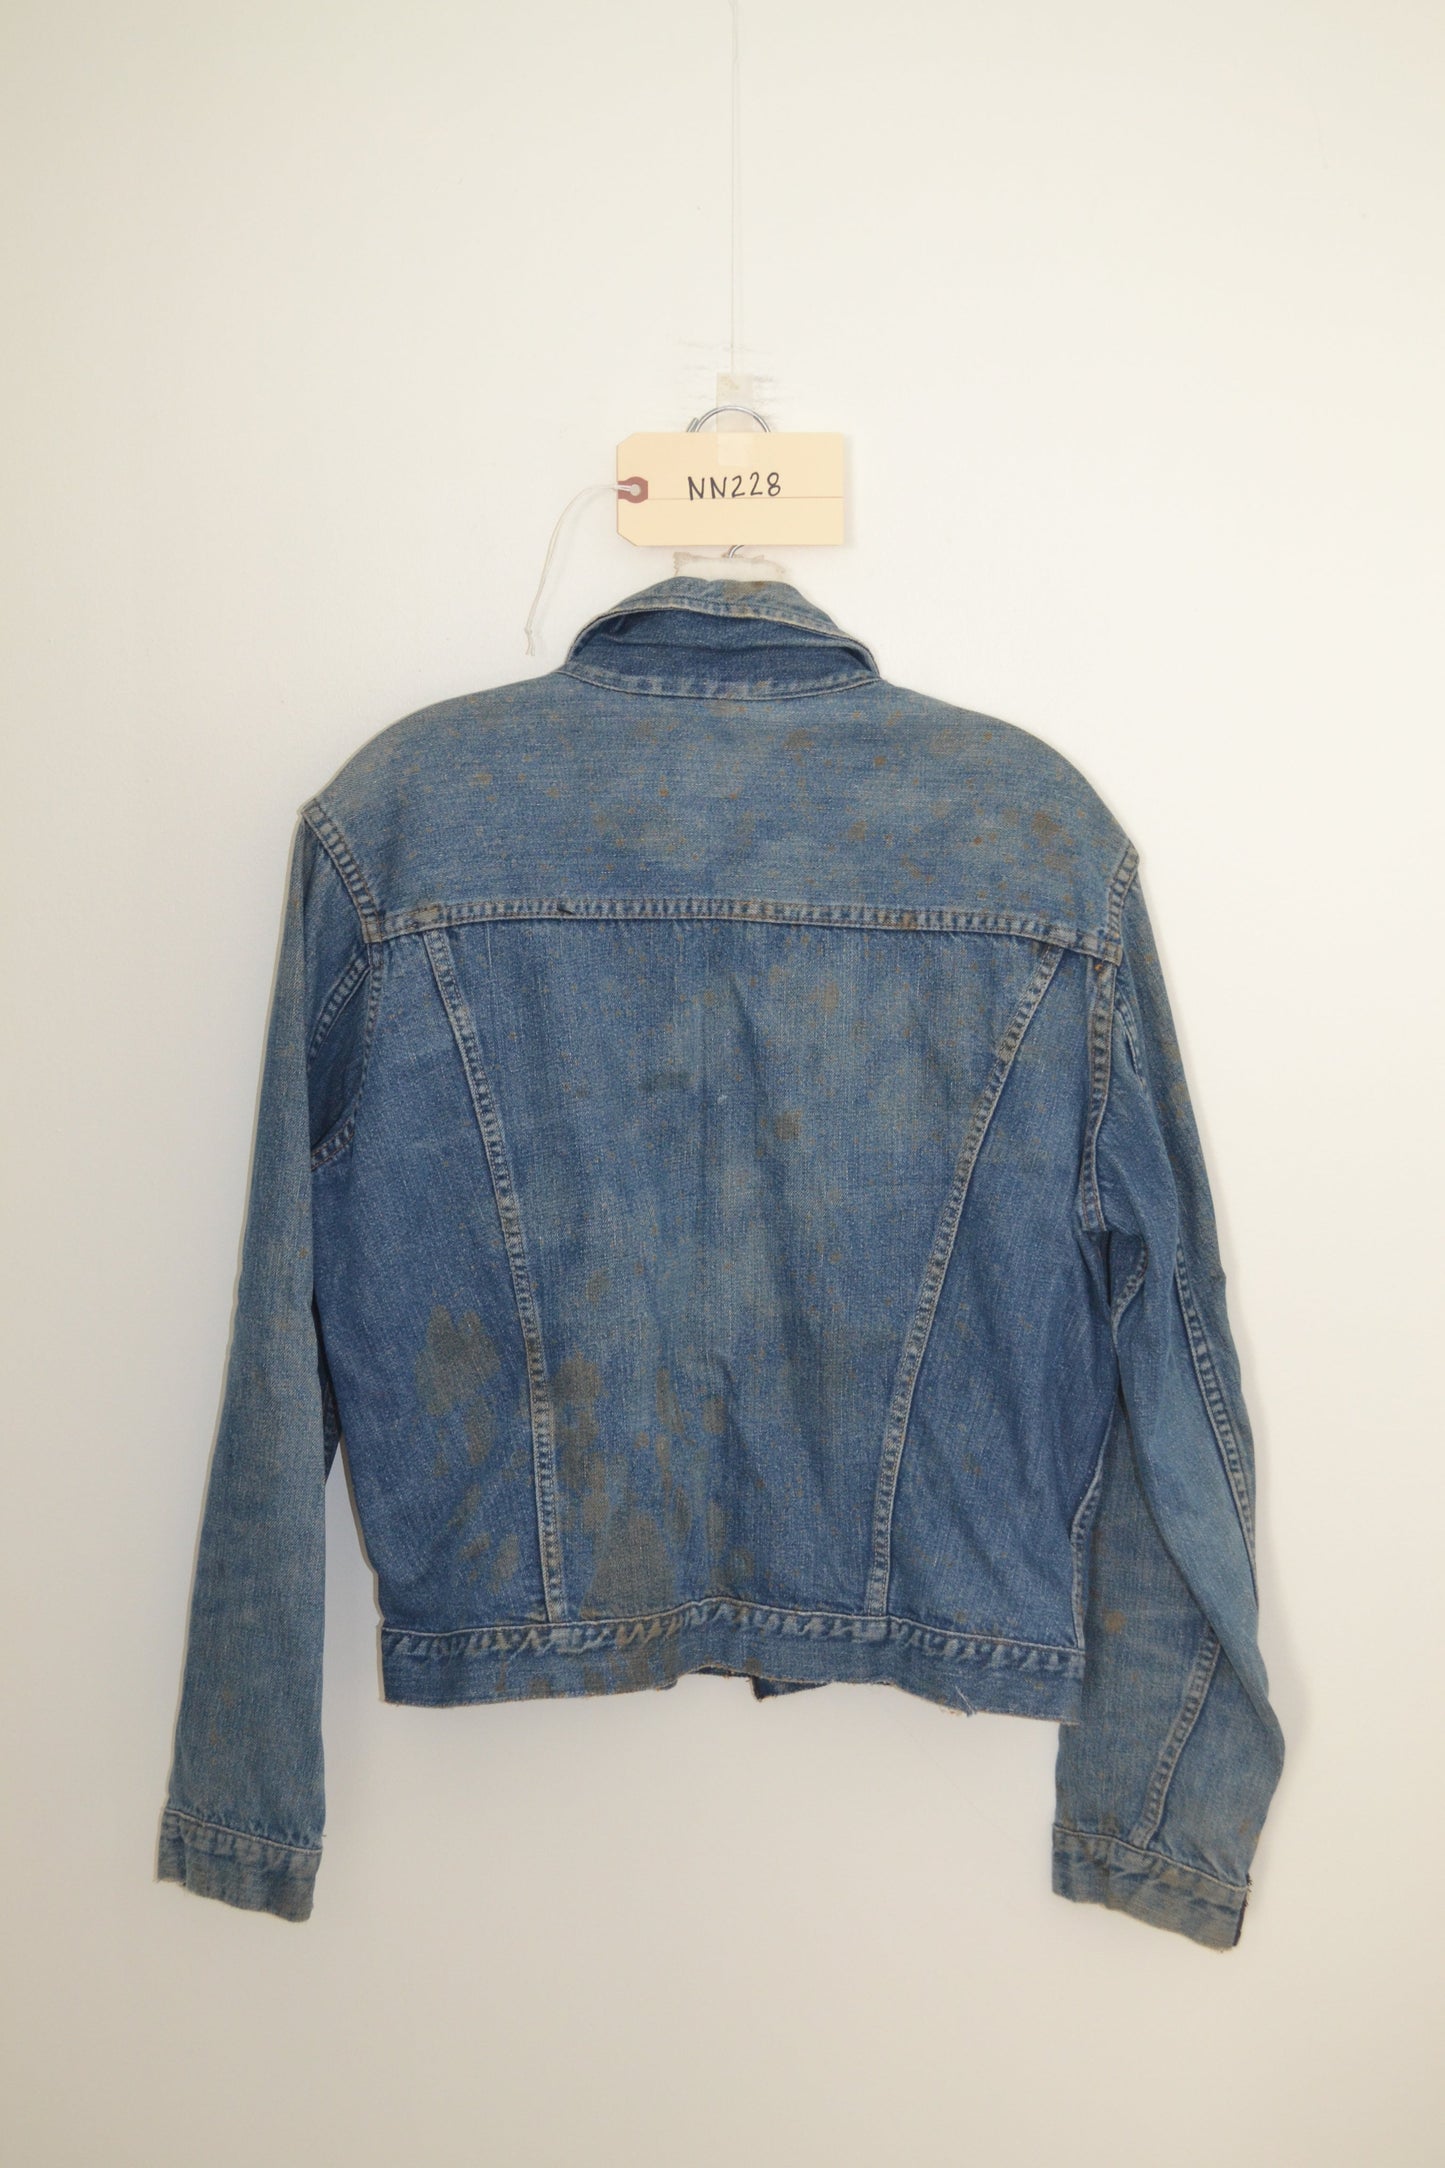 1960's Workwear Jacket. NN228